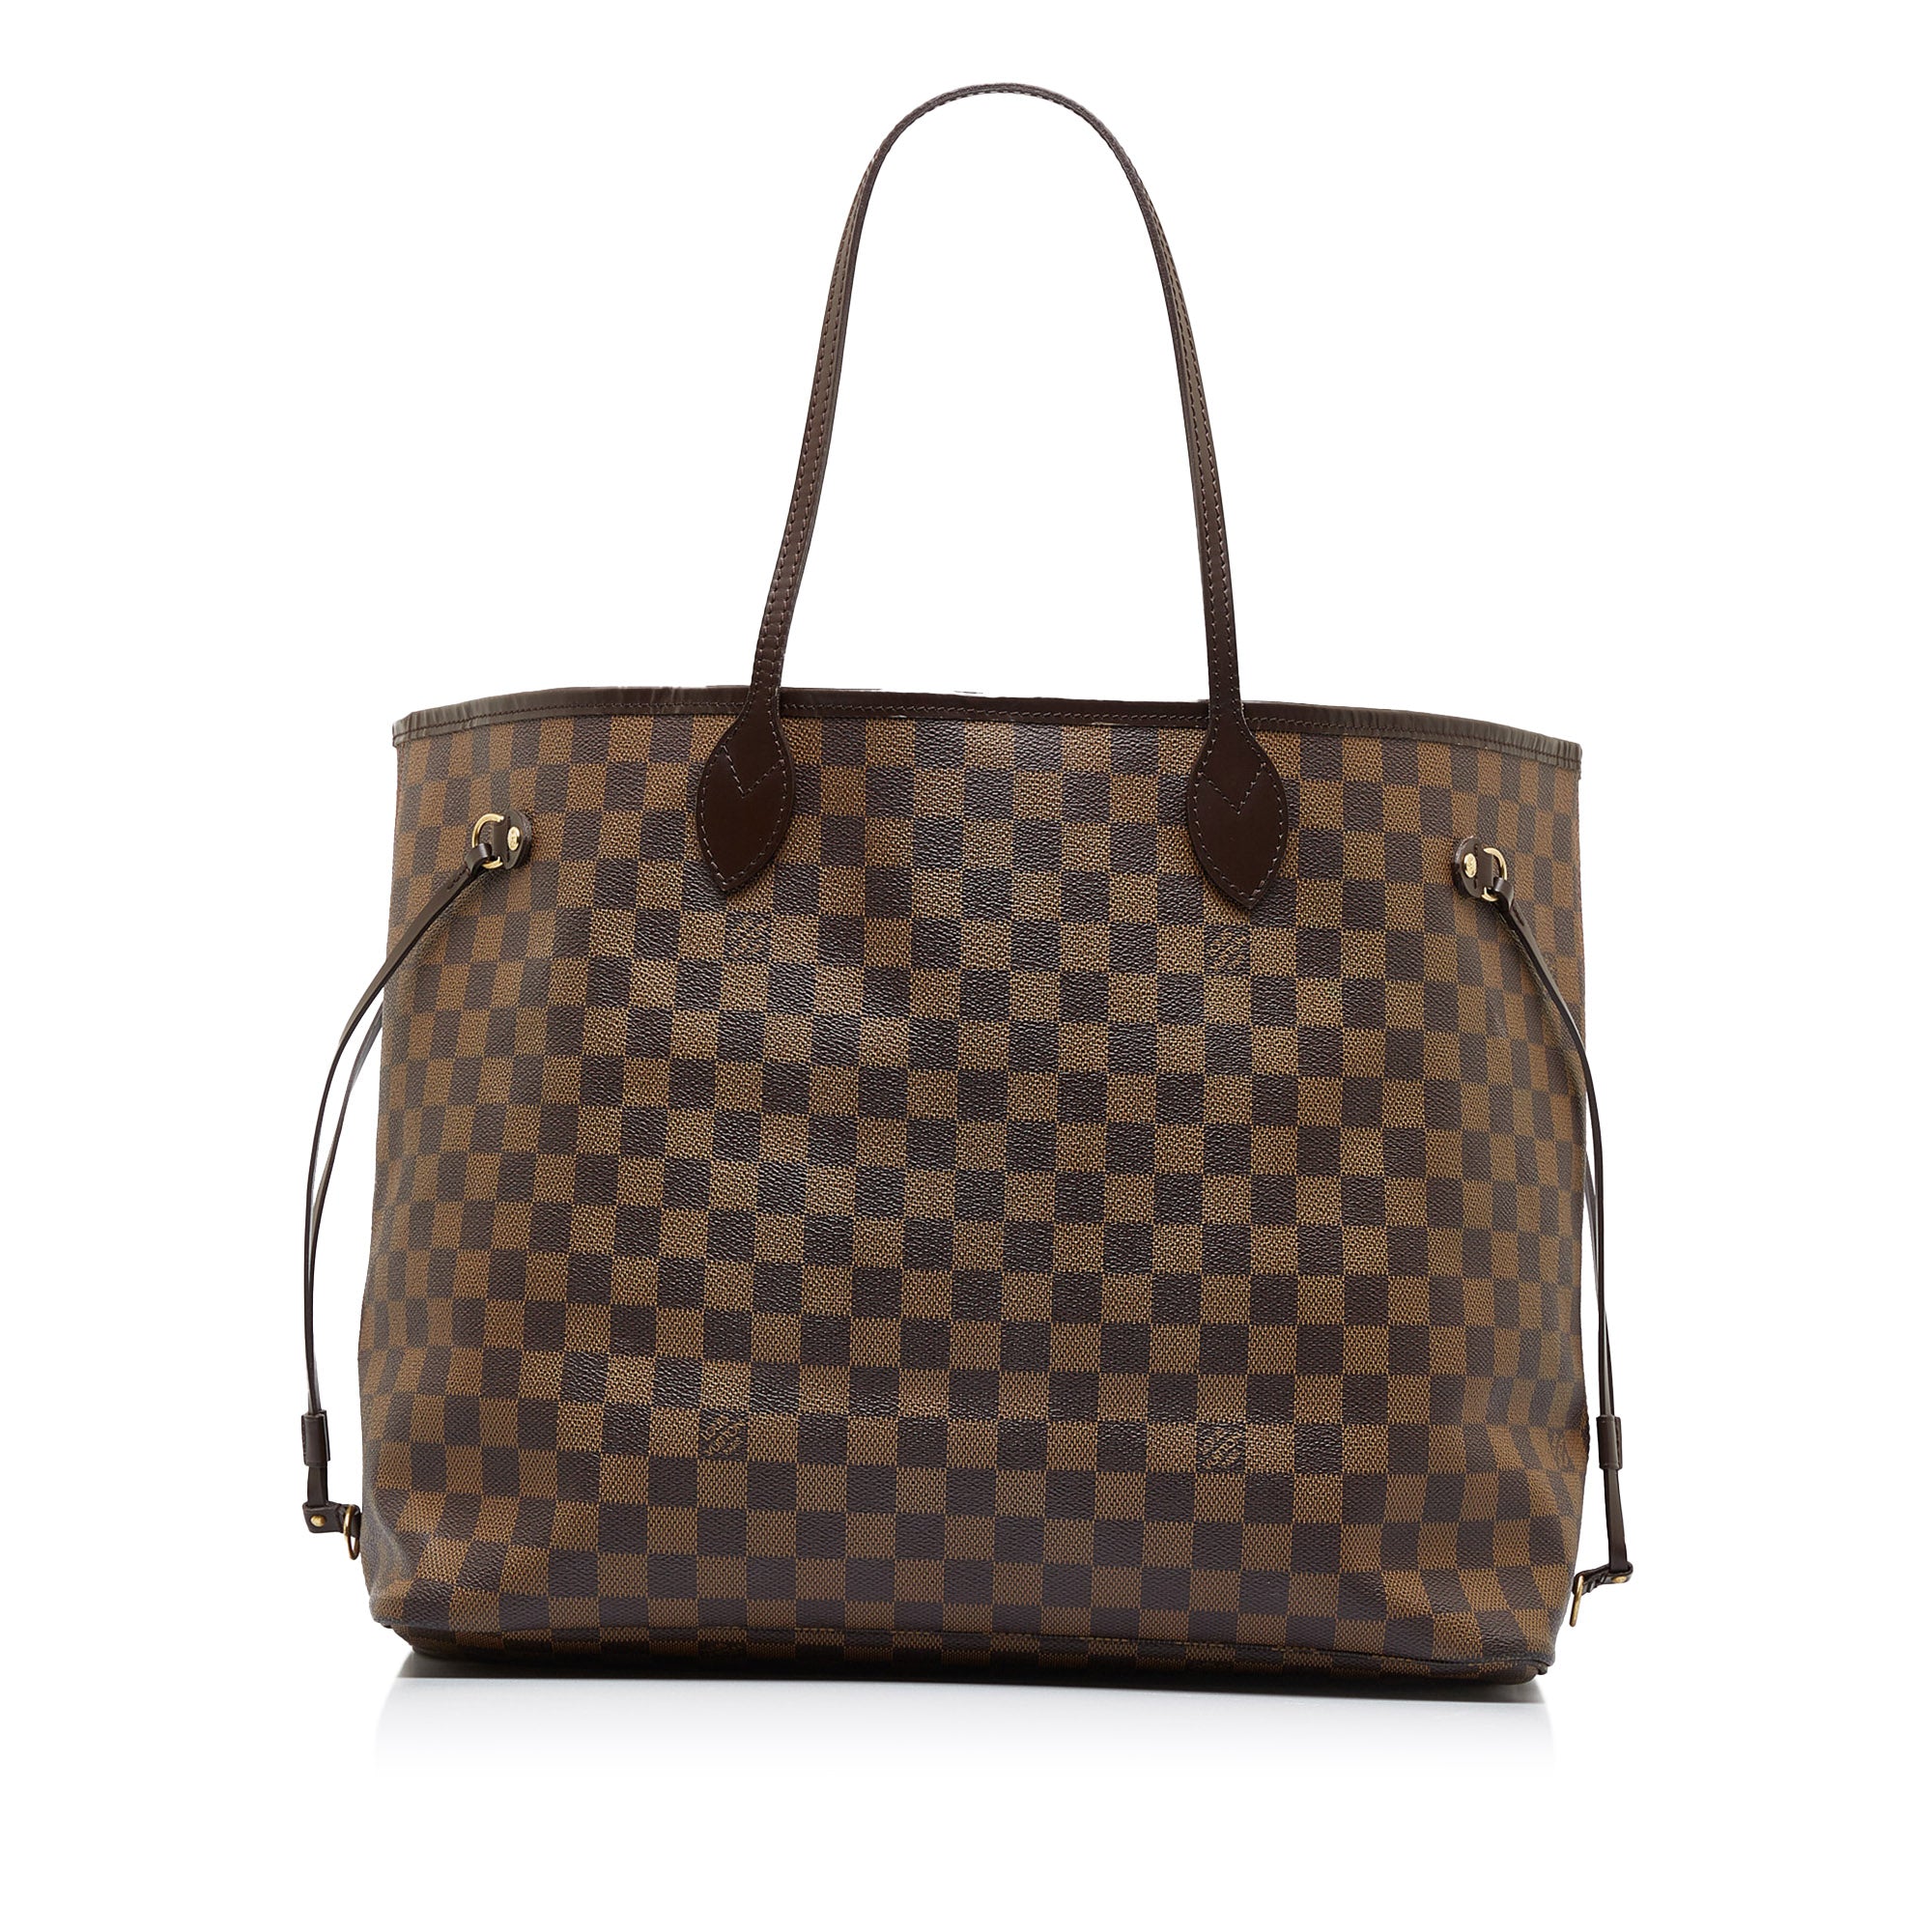 Buy Louis Vuitton Neverfull MM Damier Ebene Bags Handbags Purse